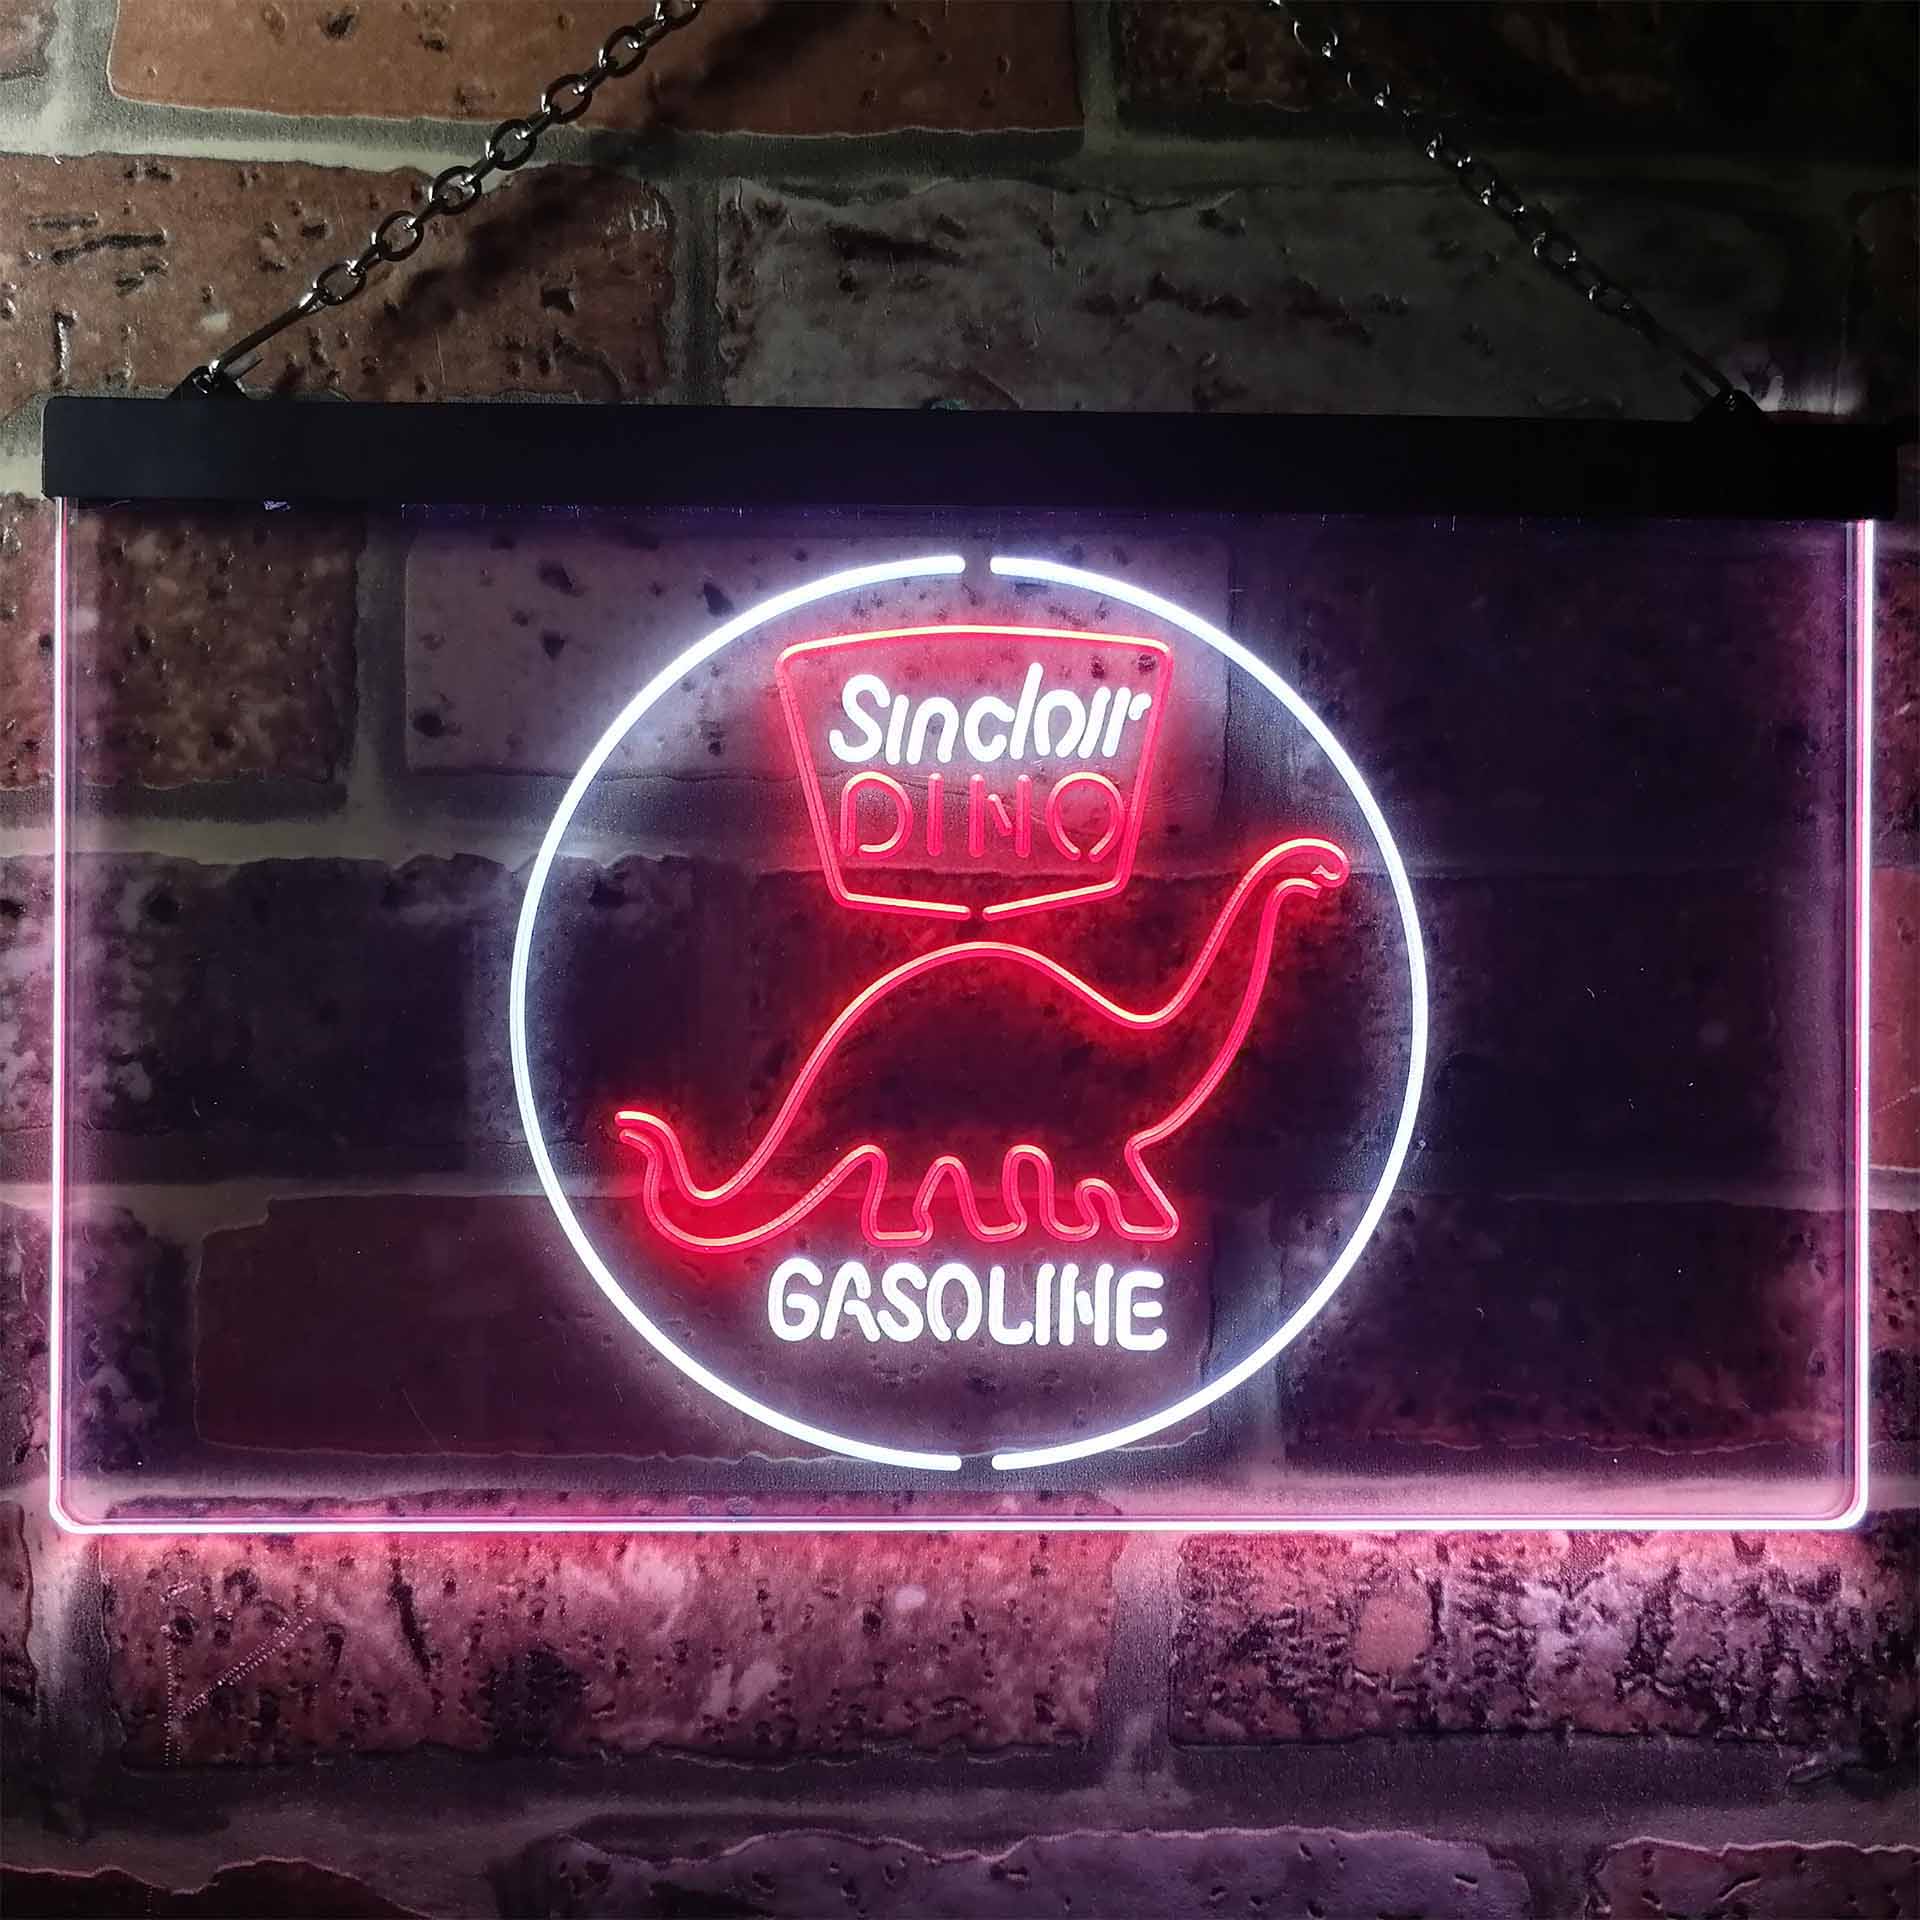 Sinclair Dinosaur Dino LED Neon Sign